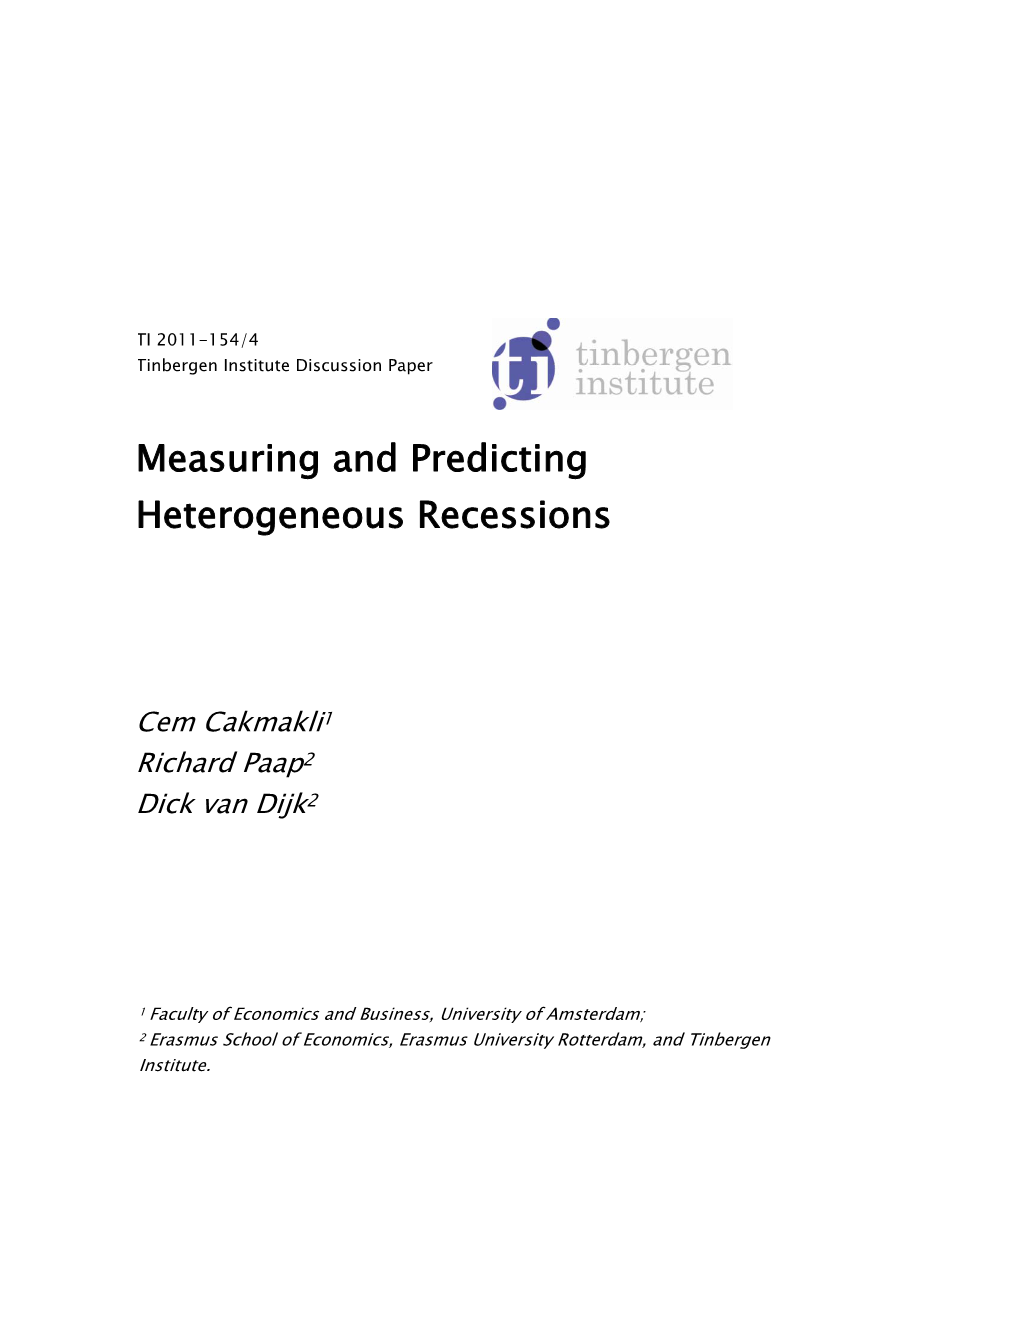 Measuring and Predicting Heterogeneous Recessions